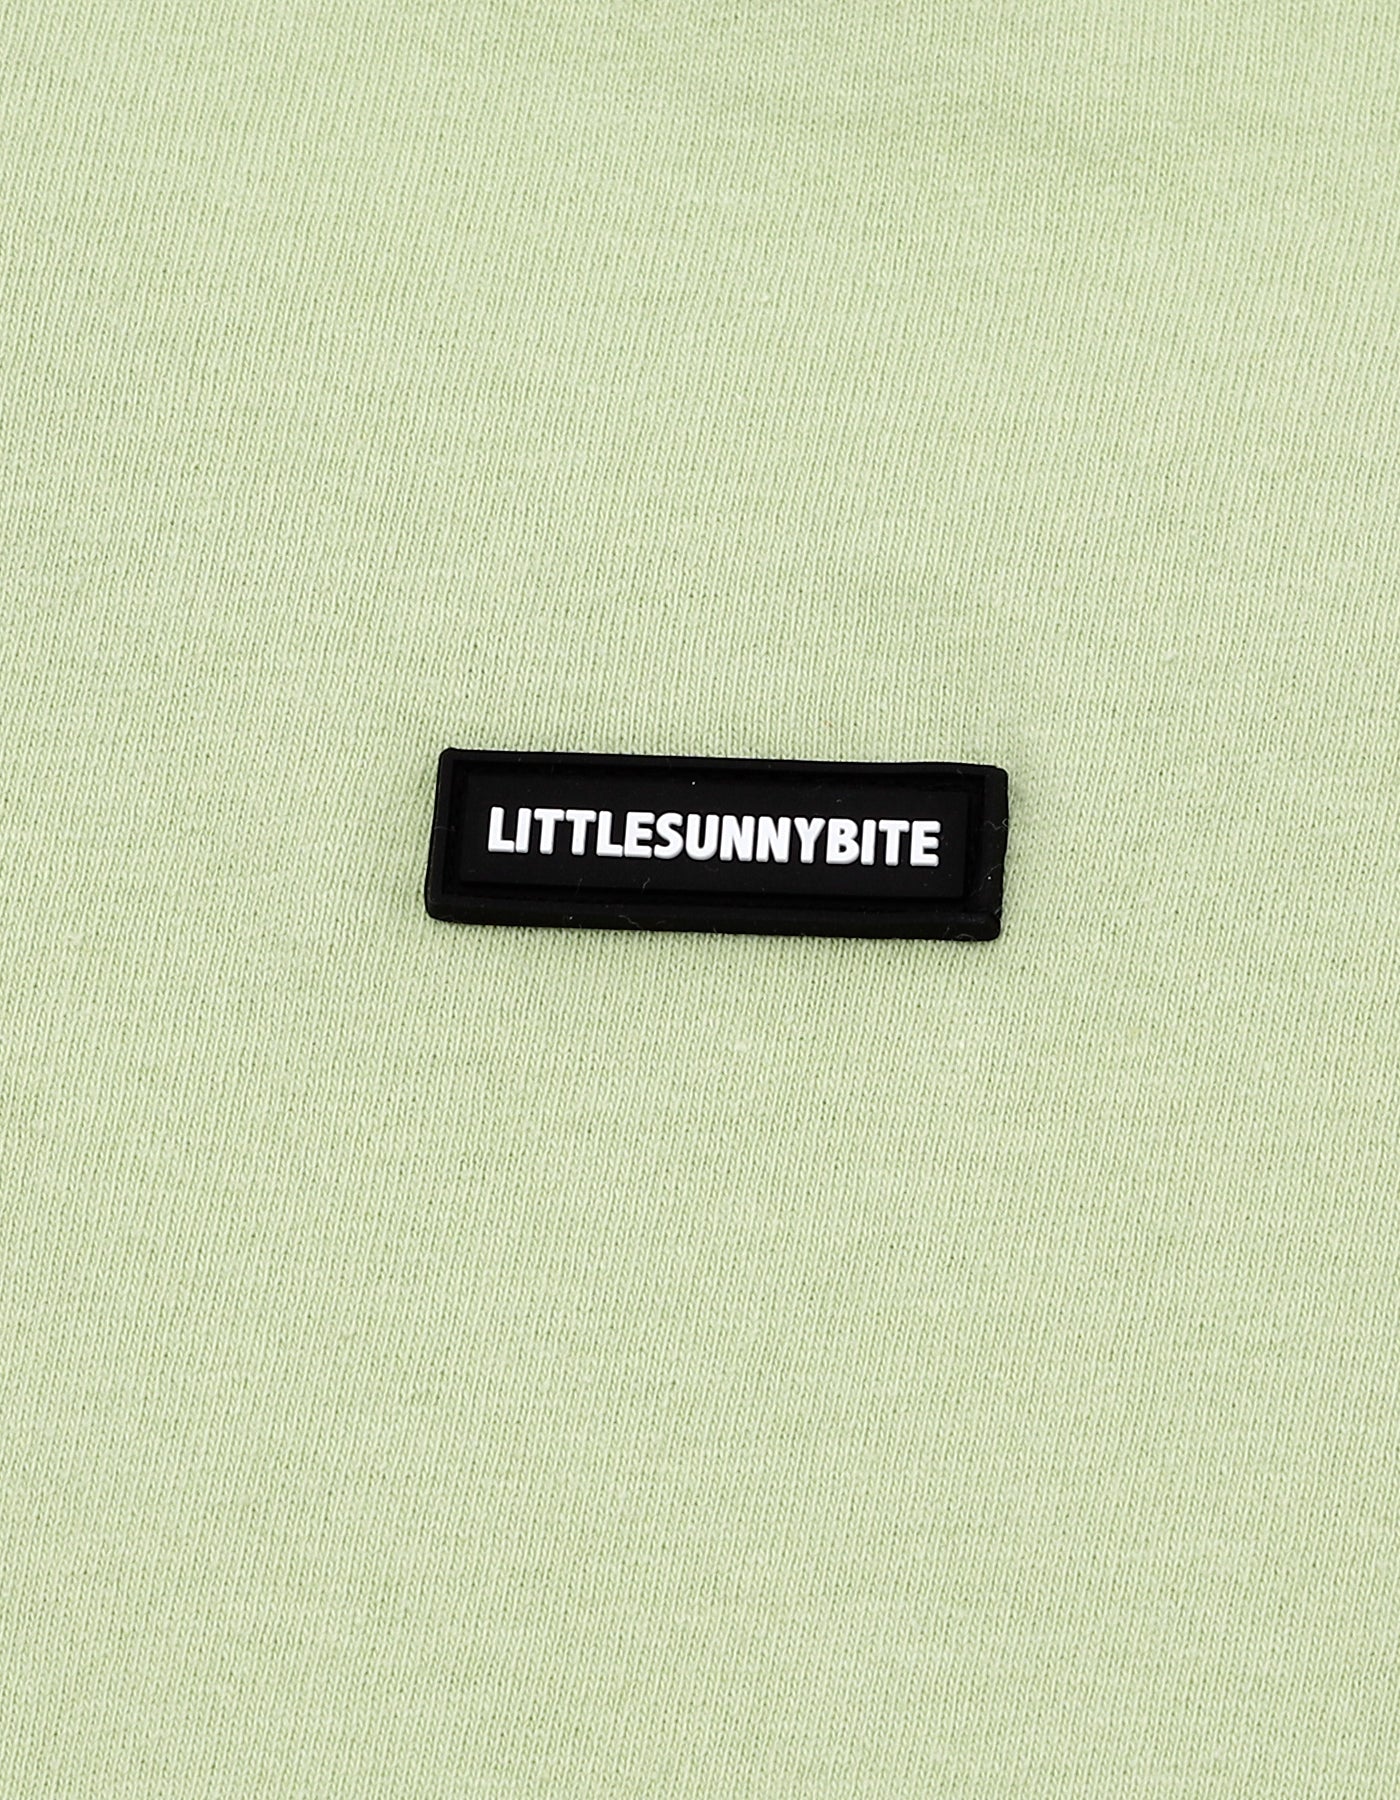 little sunny bite Stitch big tee / GREEN